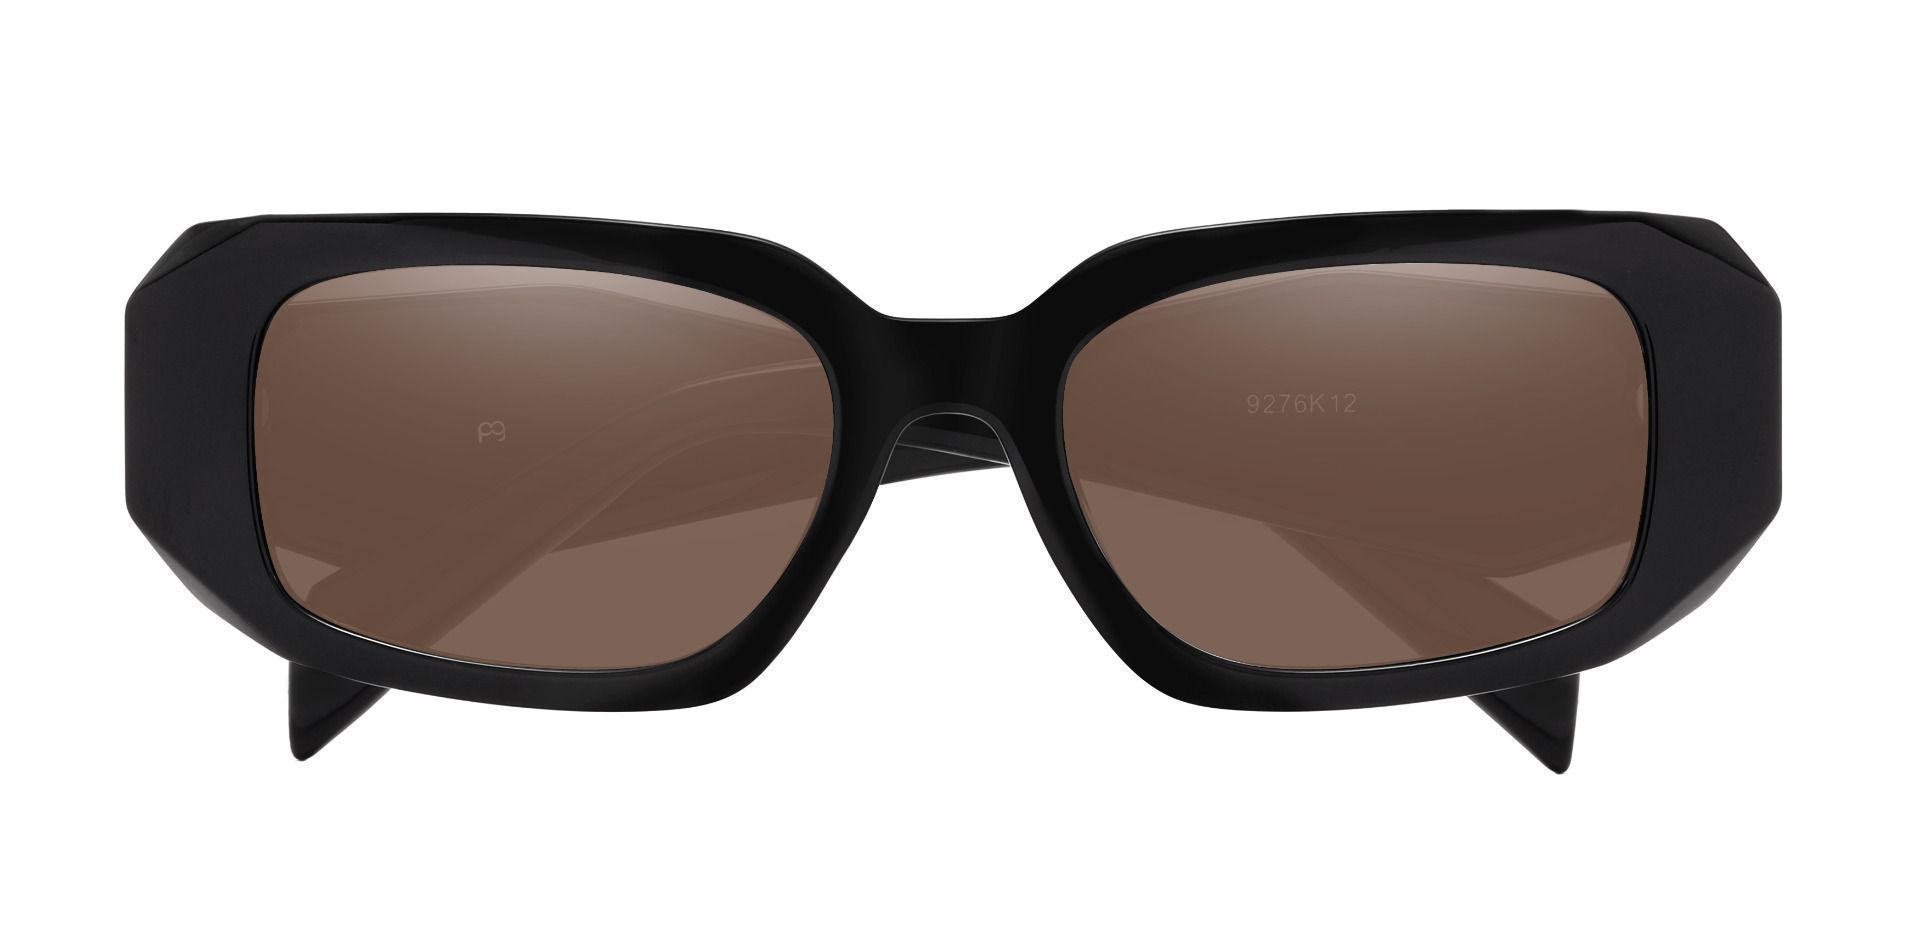 Fresno Geometric Prescription Sunglasses - Black Frame With Brown ...